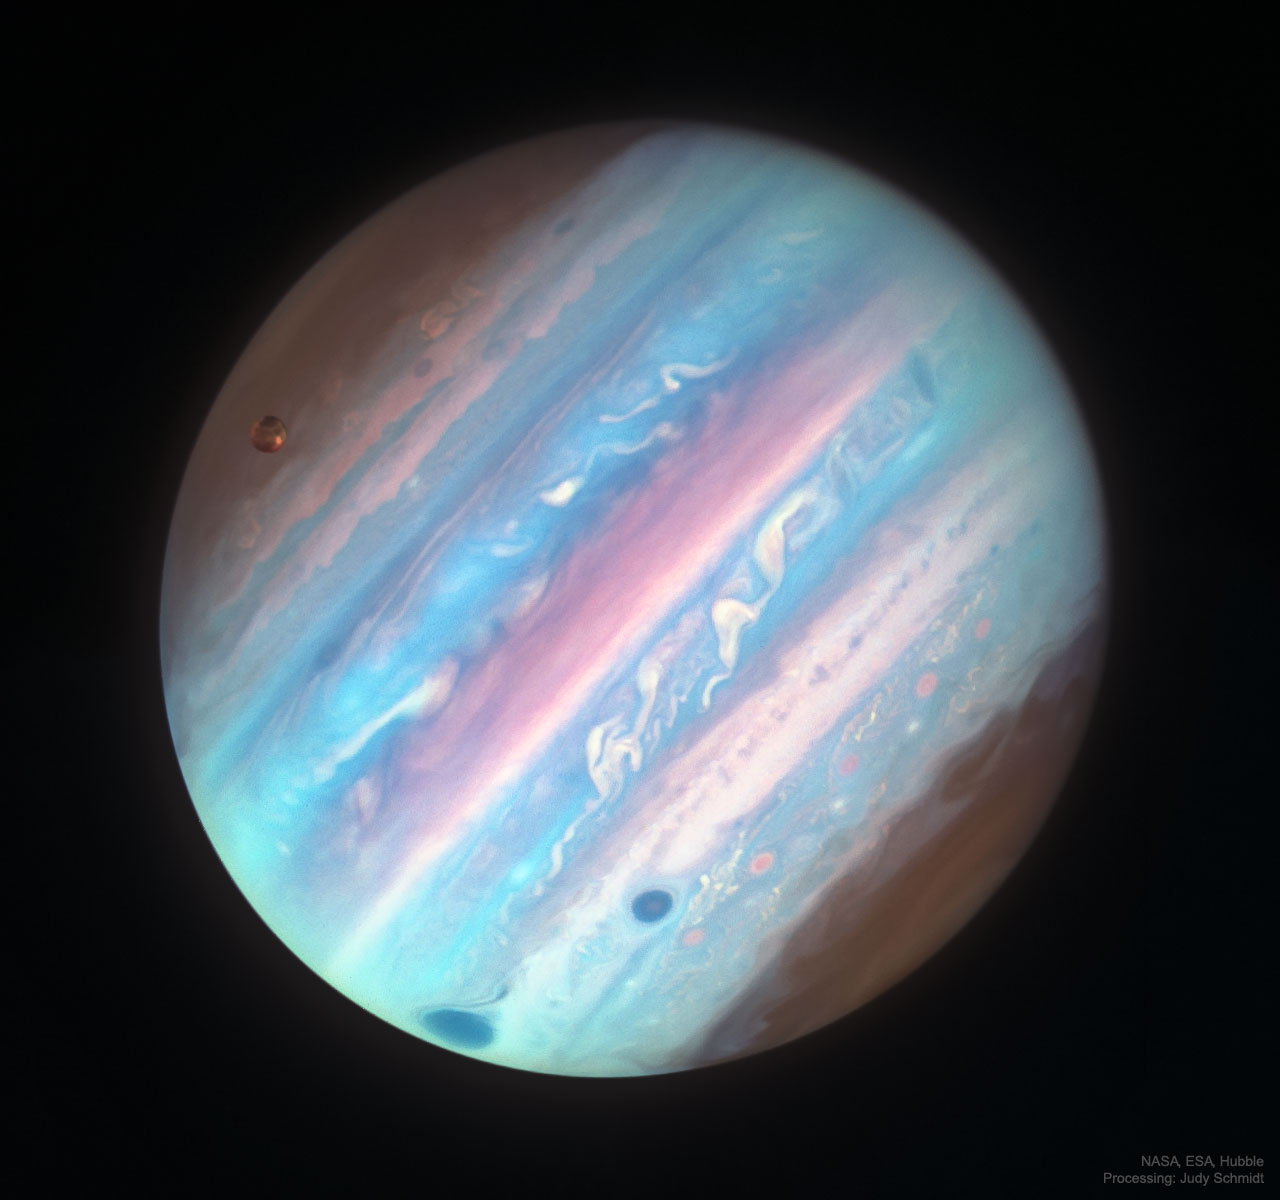 JupiterUV_HubbleSchmidt_1280.jpg